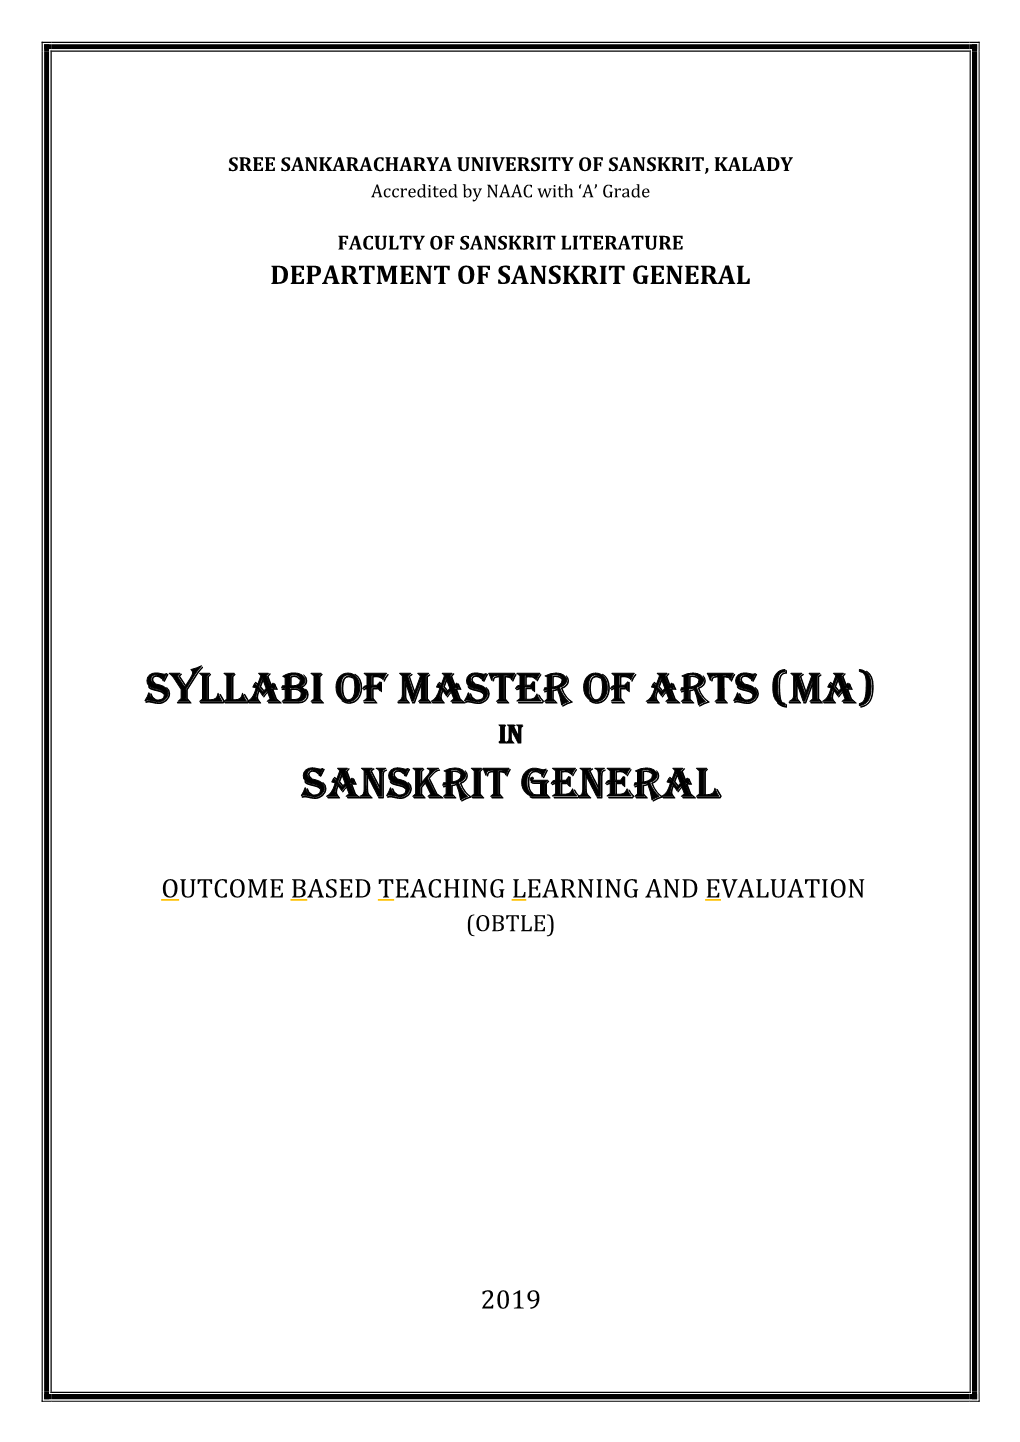 Syllabi of Master of Arts (Ma) Sanskrit General